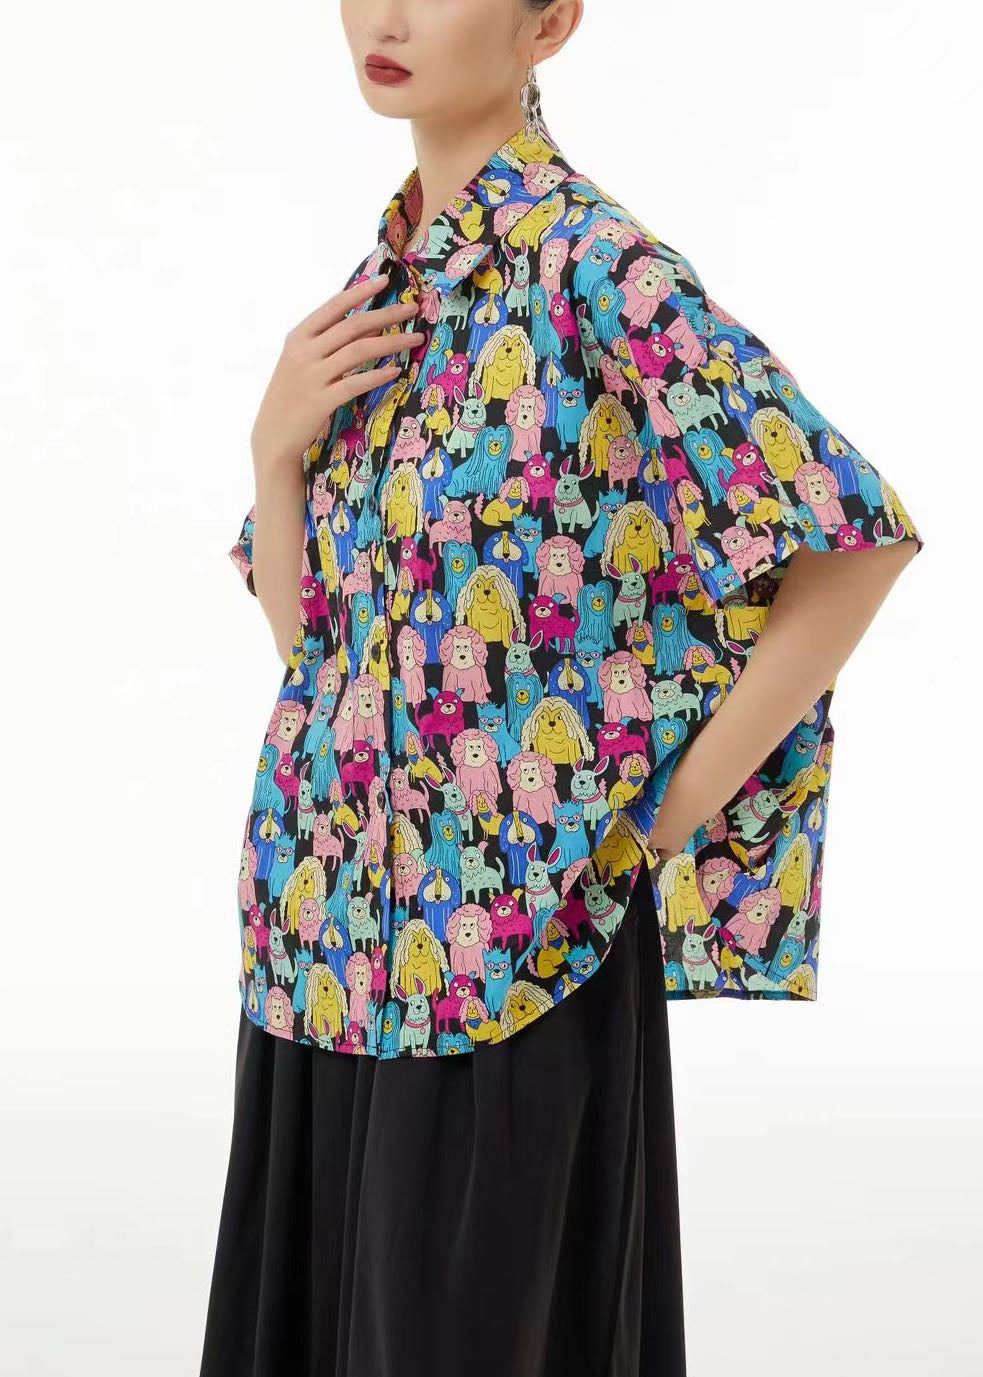 Women Khaki Peter Pan Collar Animal Print Cotton Blouses Summer LC0159 - fabuloryshop